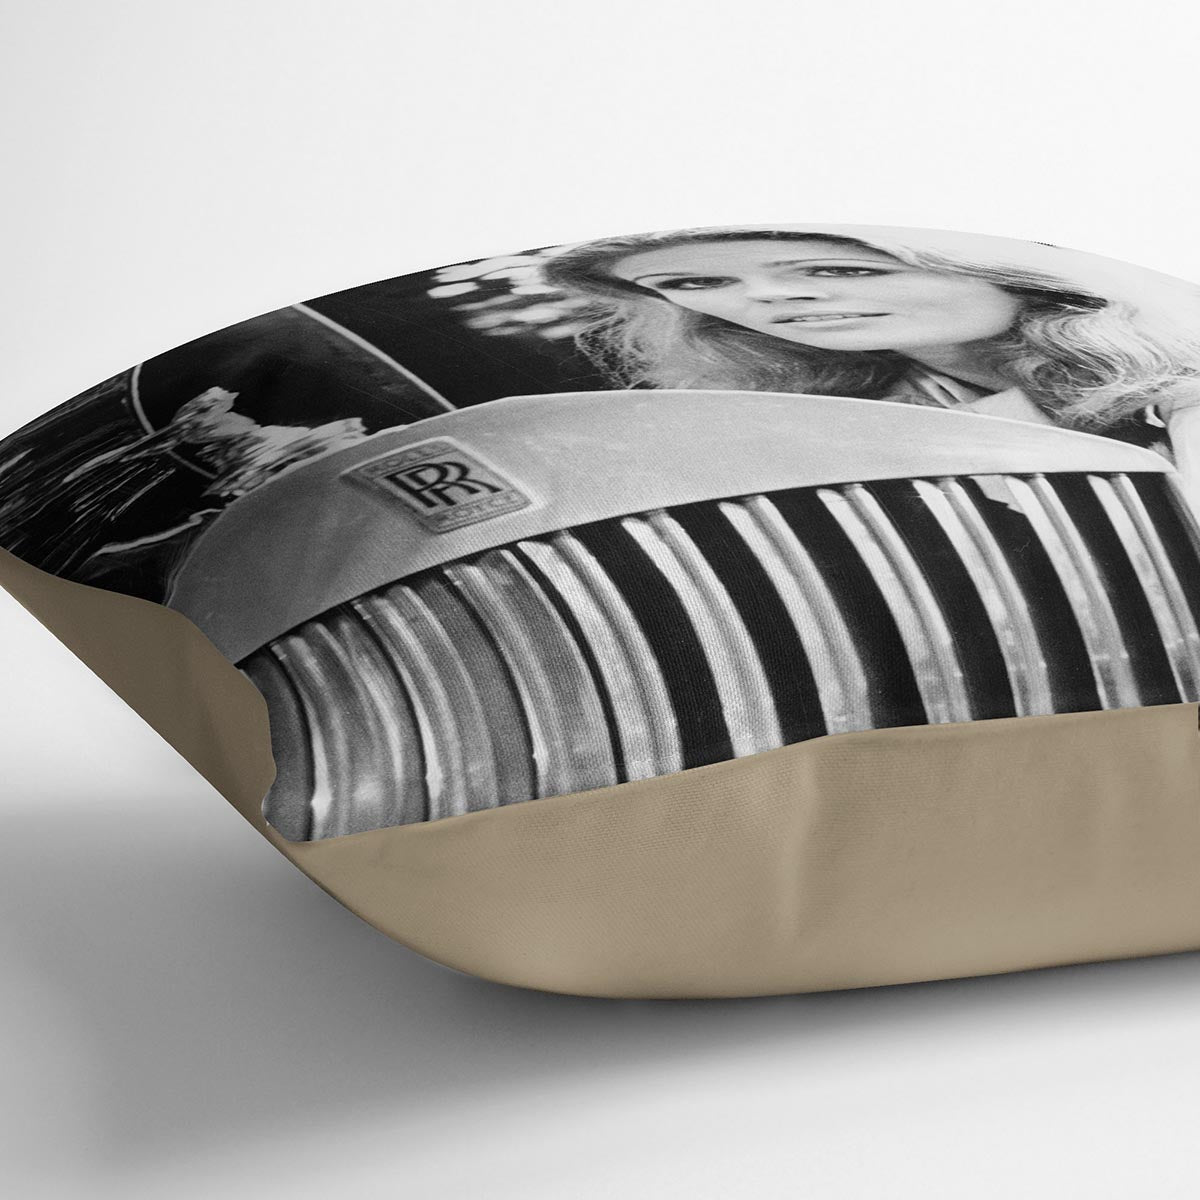 Joanna Lumley with her Rolls Royce Cushion